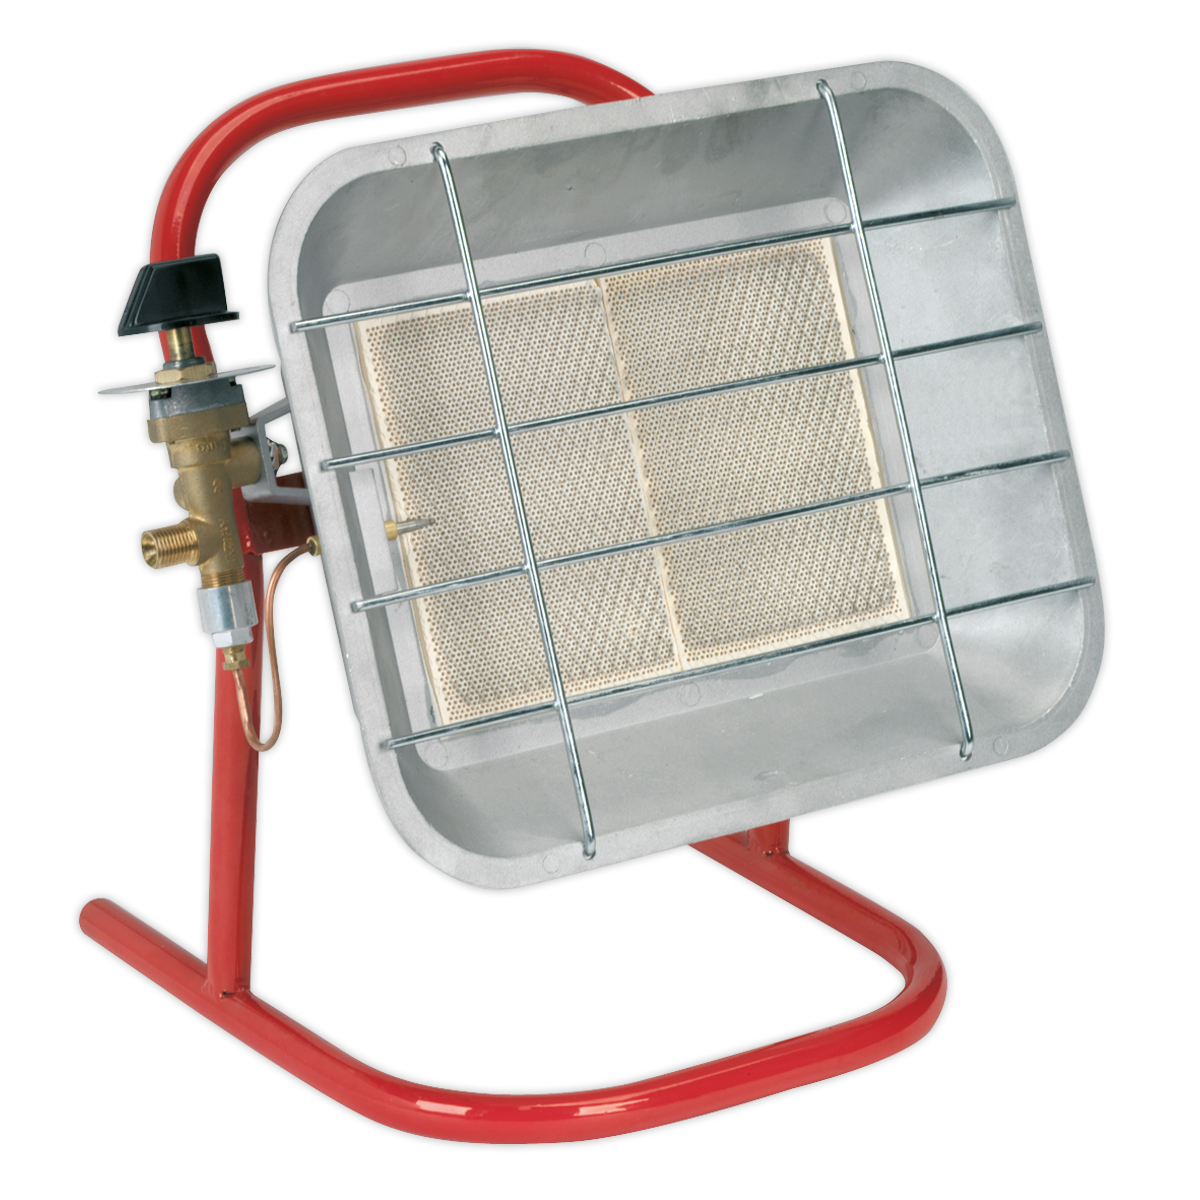 SEALEY - LP14 Space Warmer� Propane Heater with Stand 10,250-15,354Btu/hr